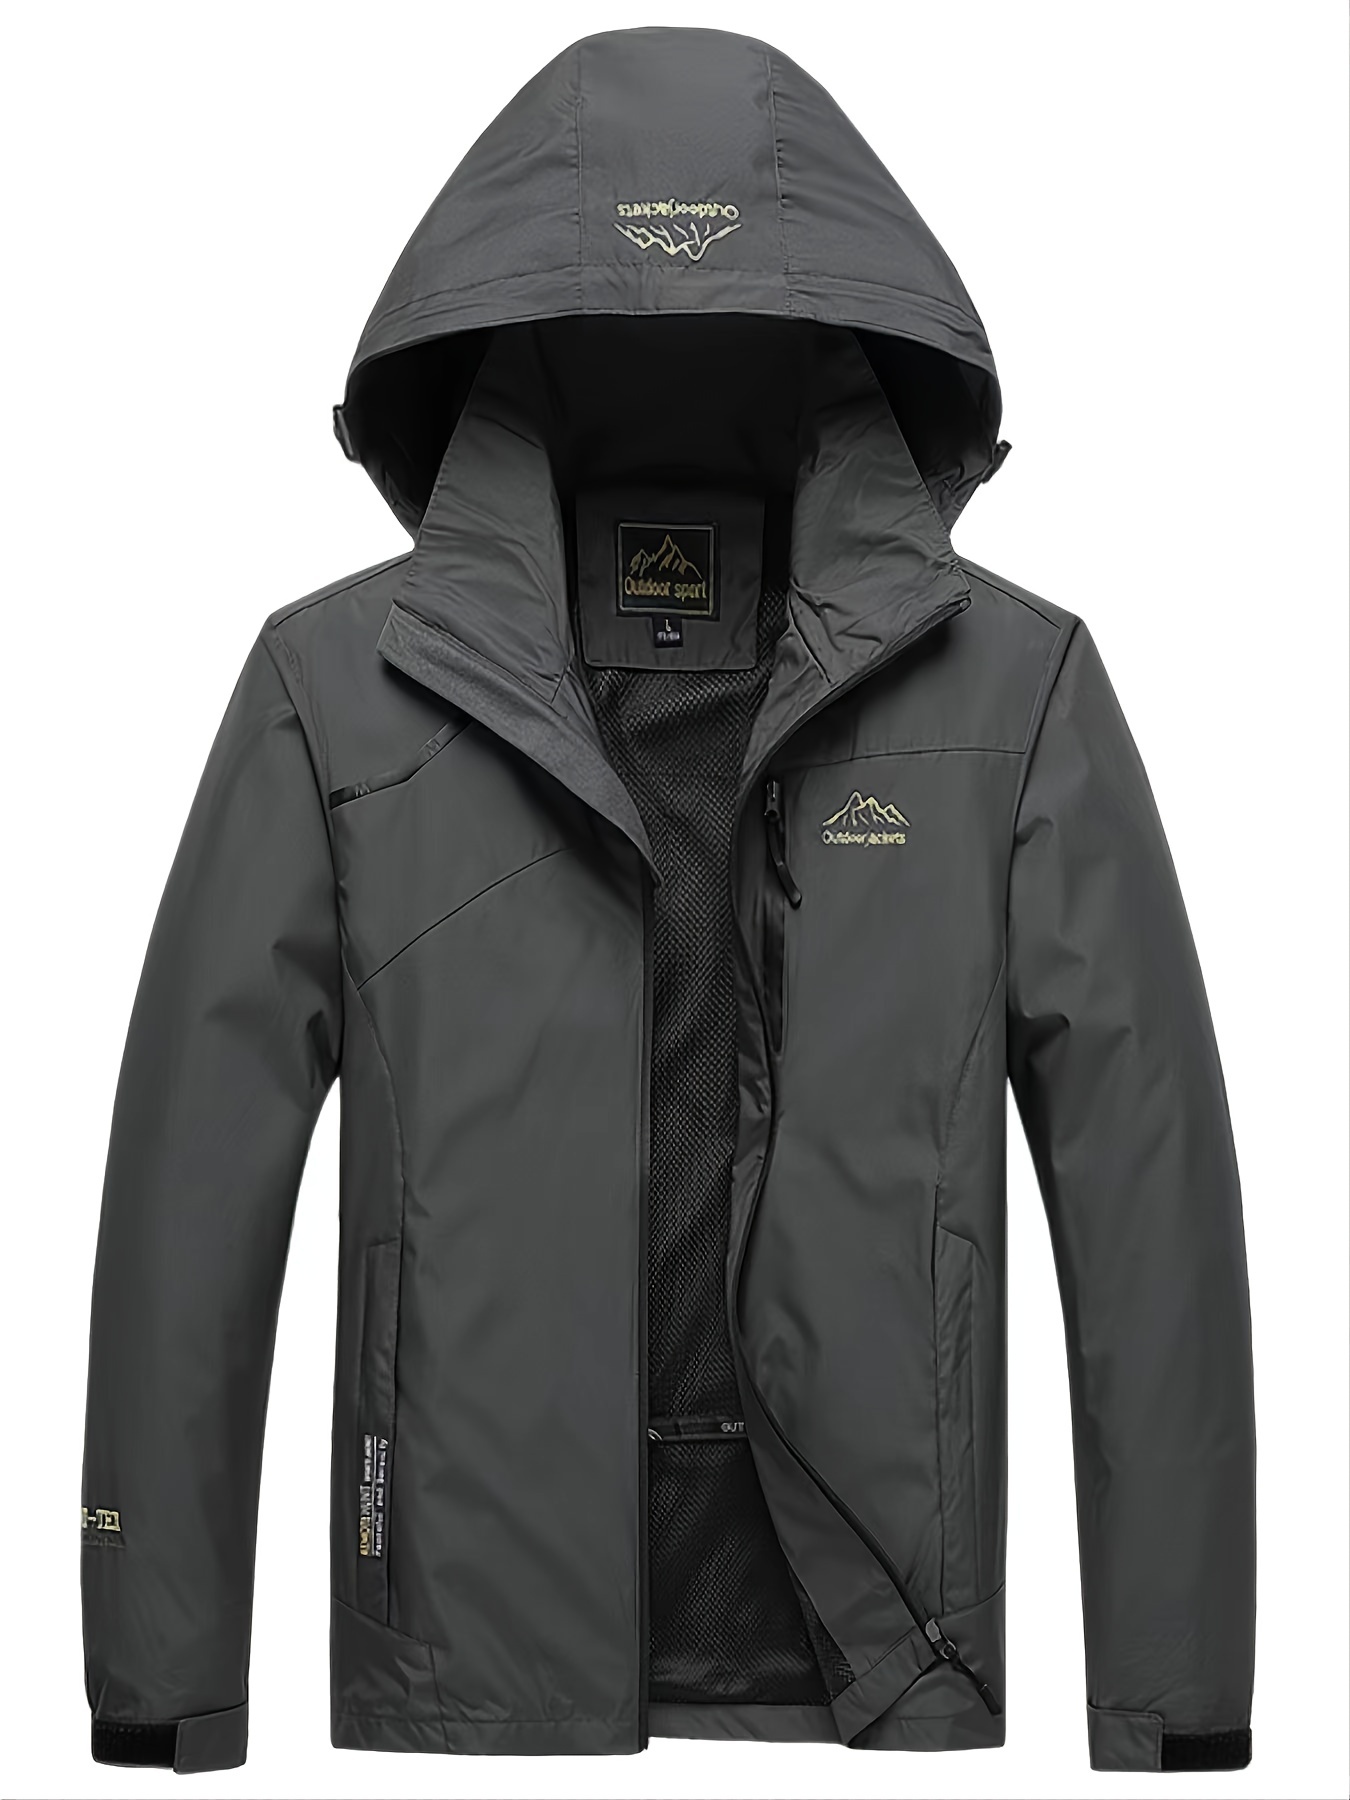 mens waterproof rain jacket lightweight raincoat windbreaker with hood for hiking travel outdoor details 10